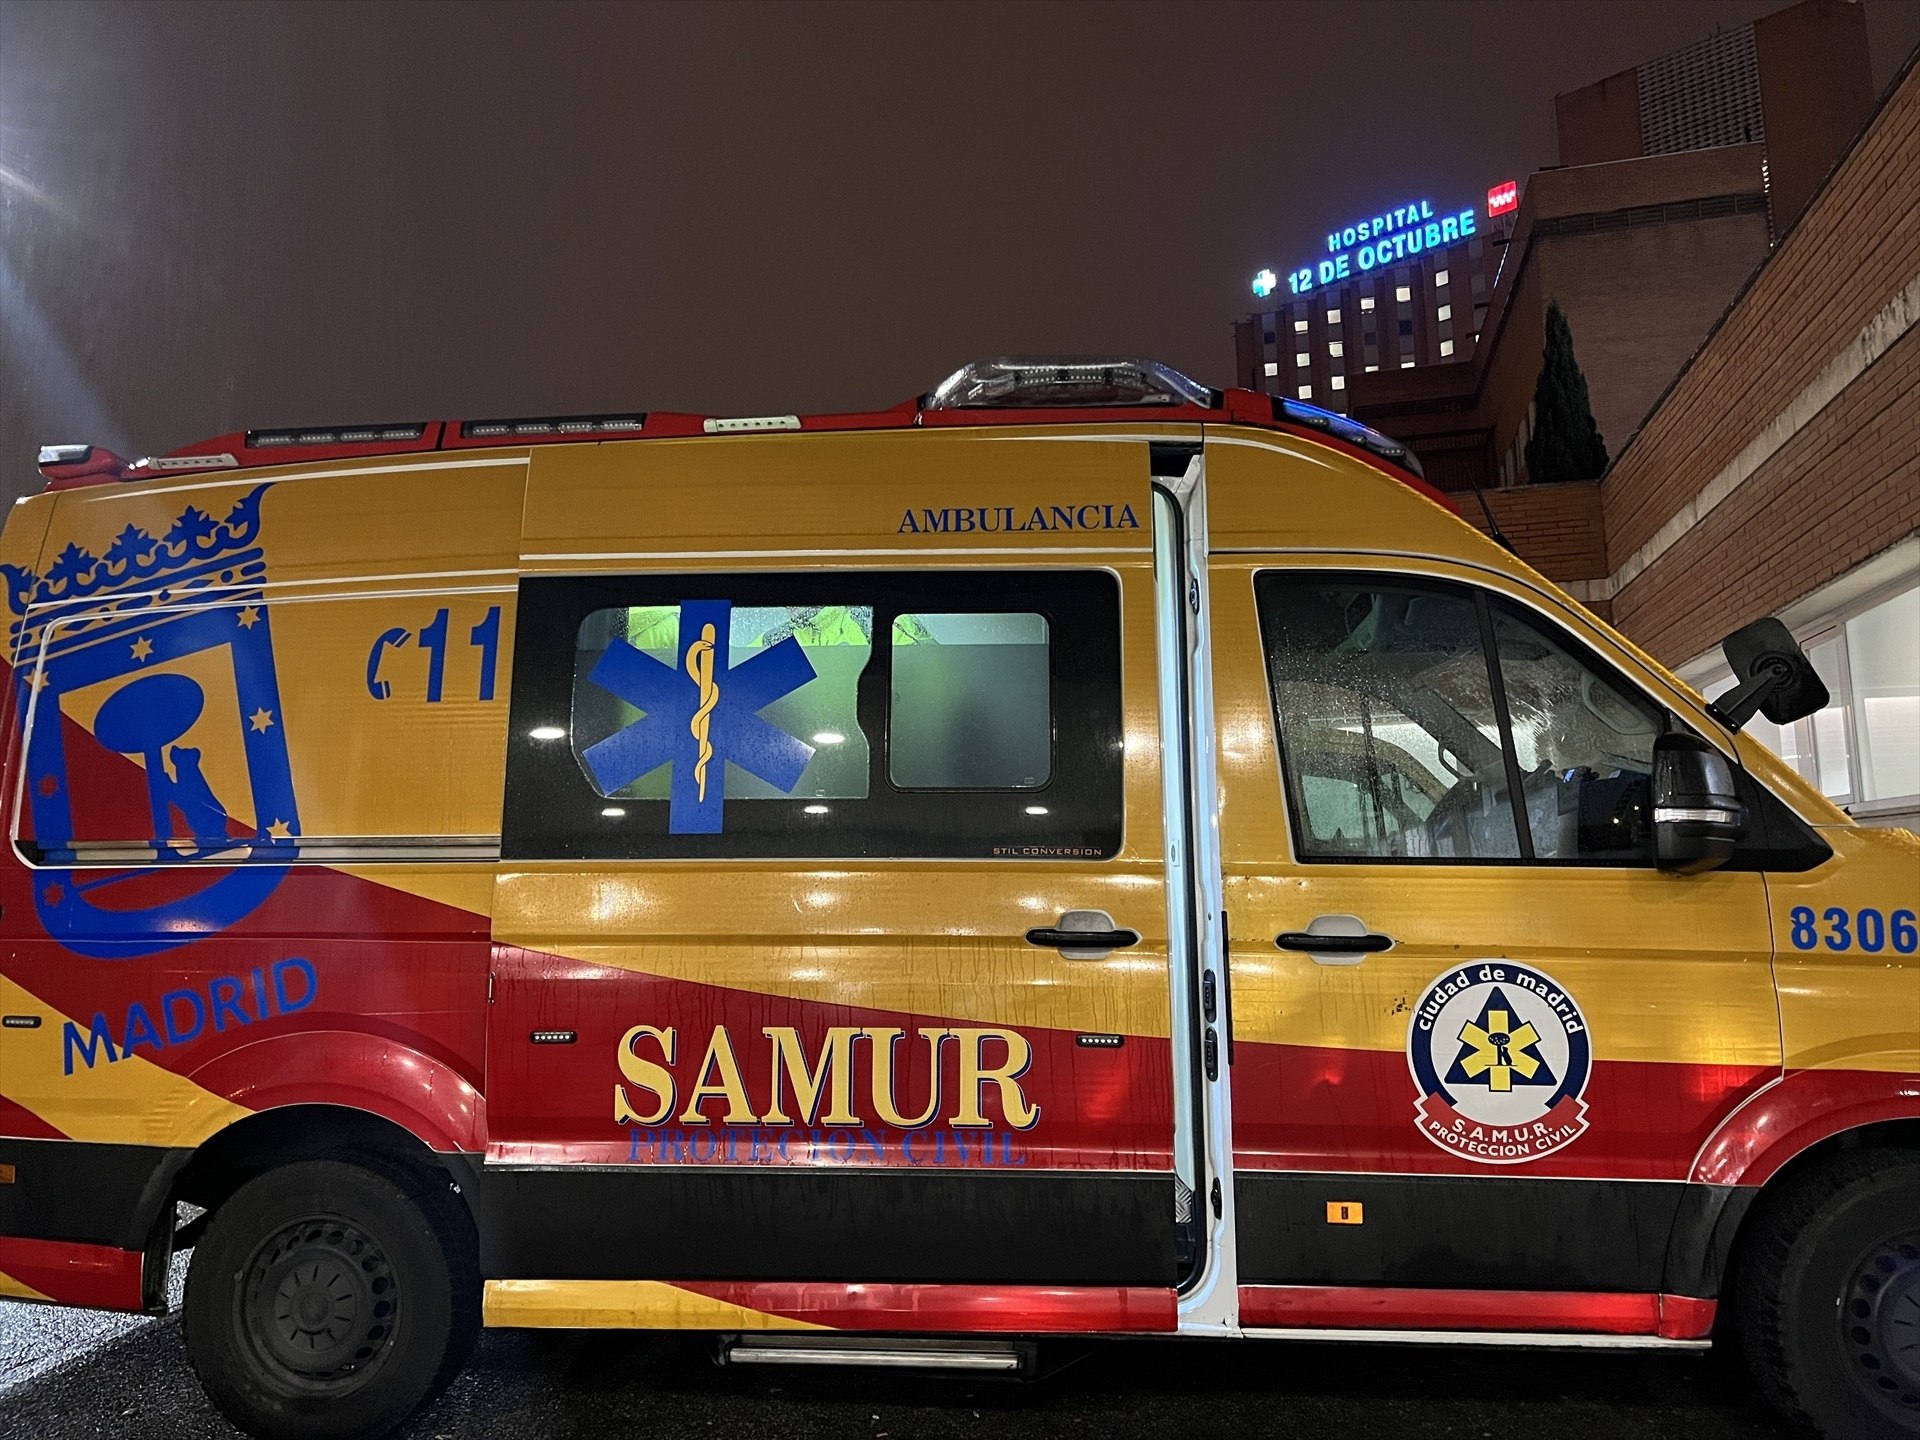 EuropaPress 5500555 ambulancia samur proteccion civil frente hospital 12 octubre madrid